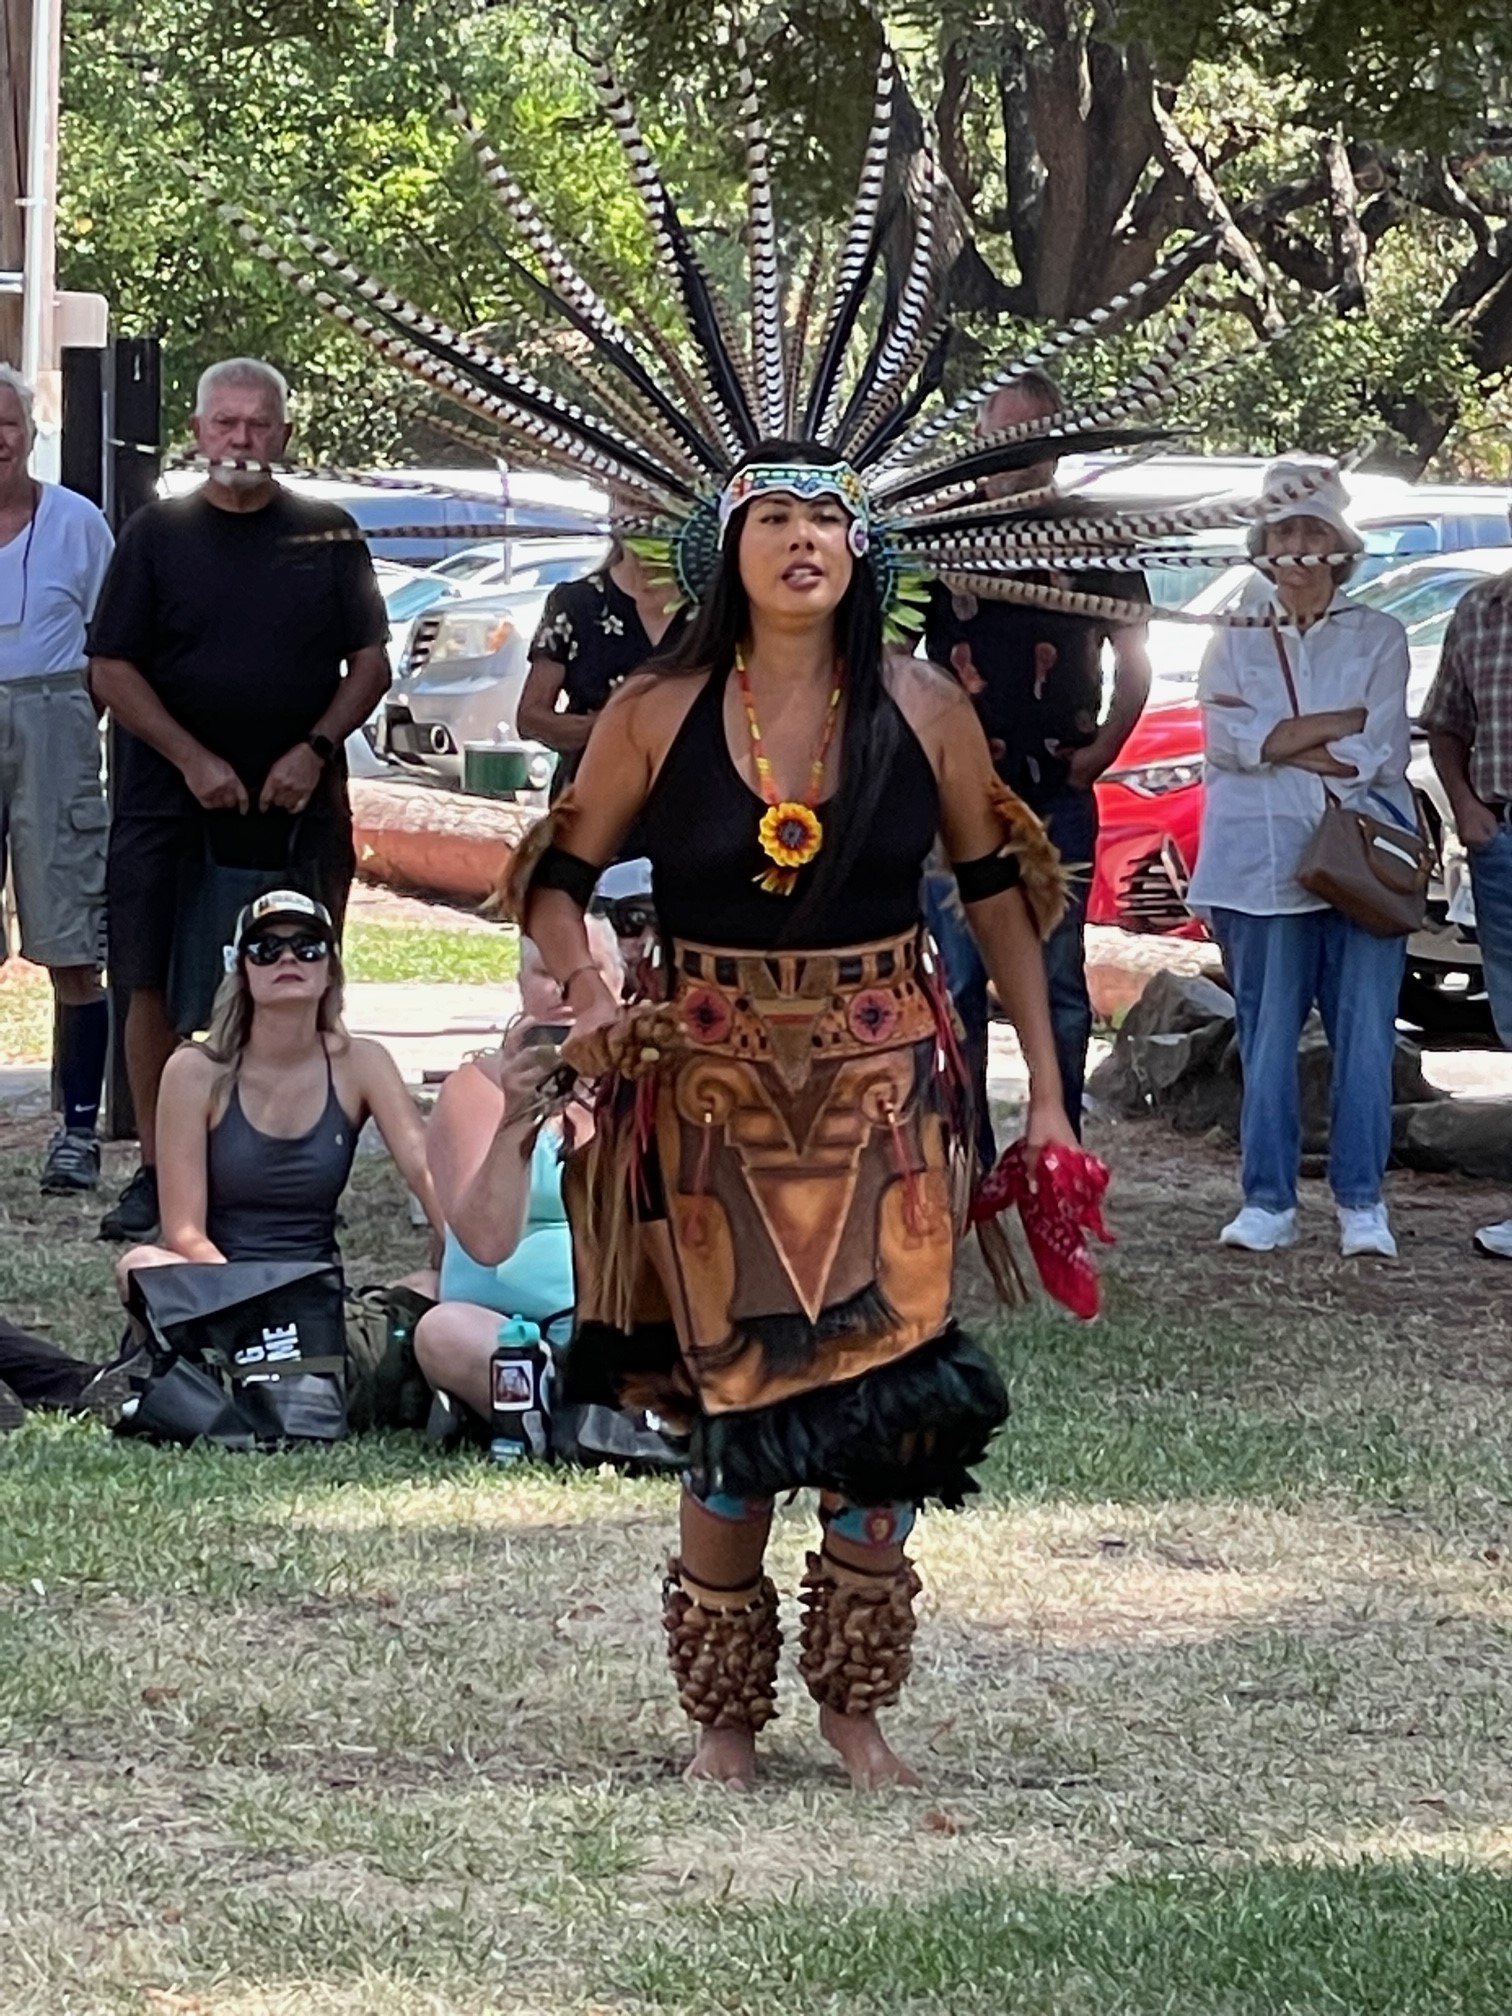 Kalpulli Anahuak Aztec Dancer performing at Peña Adobe.